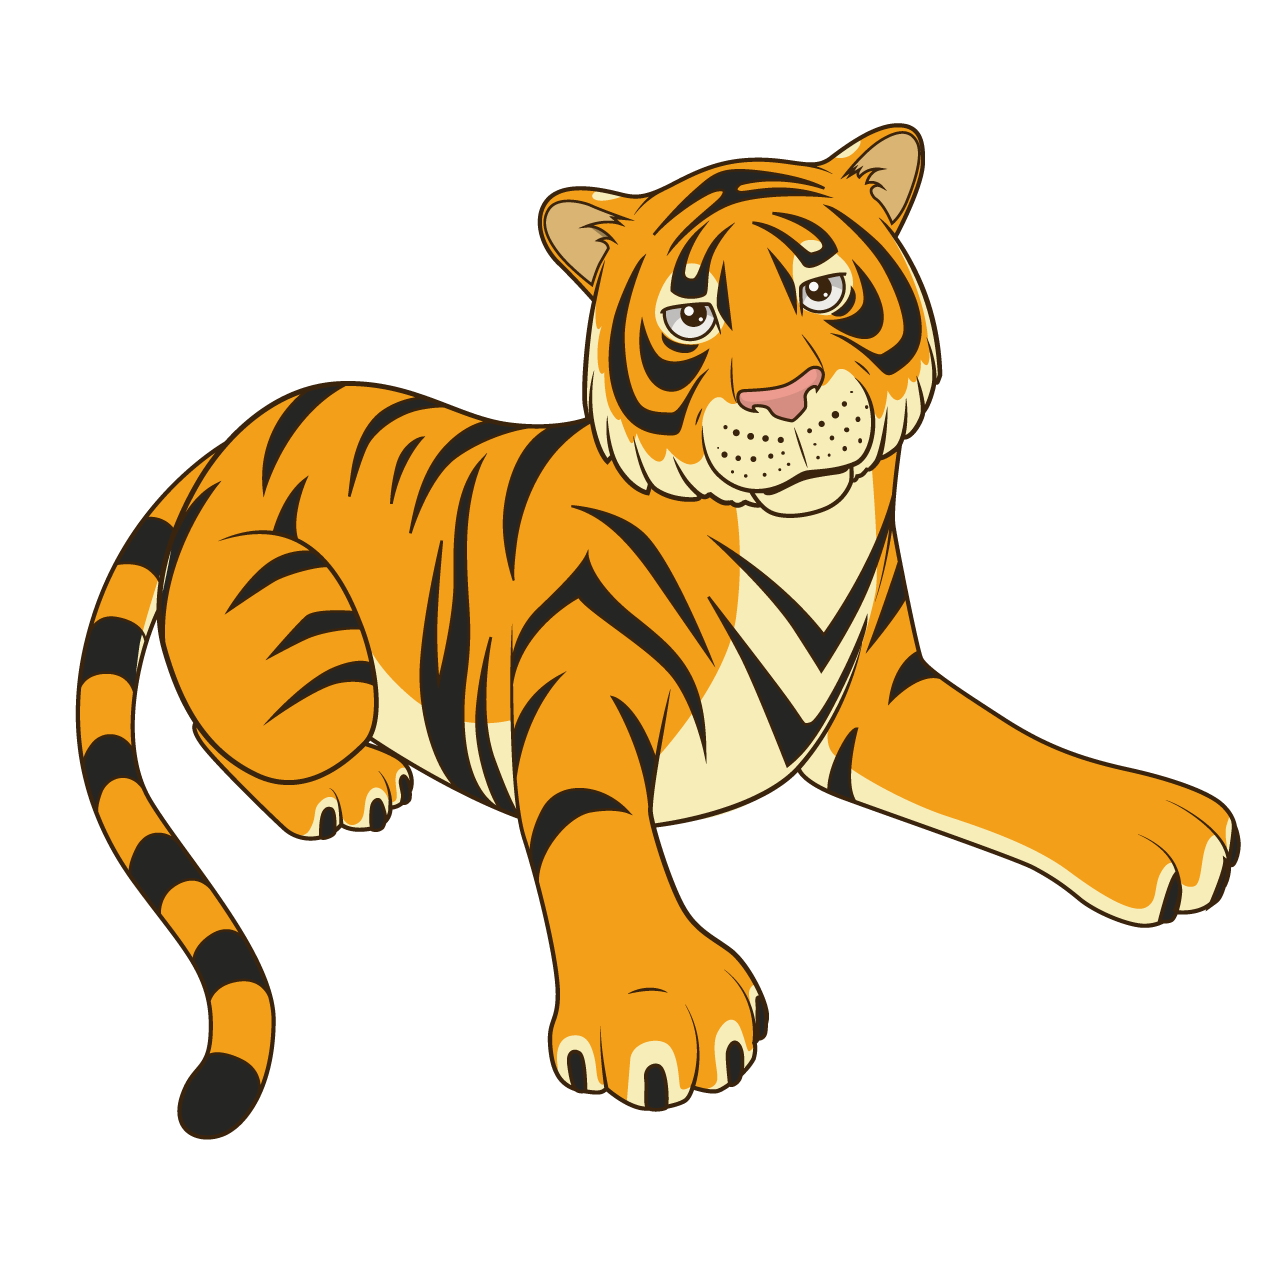 Download Tiger Black Cartoon Illustration Panther Free Clipart HQ HQ PNG  Image | FreePNGImg